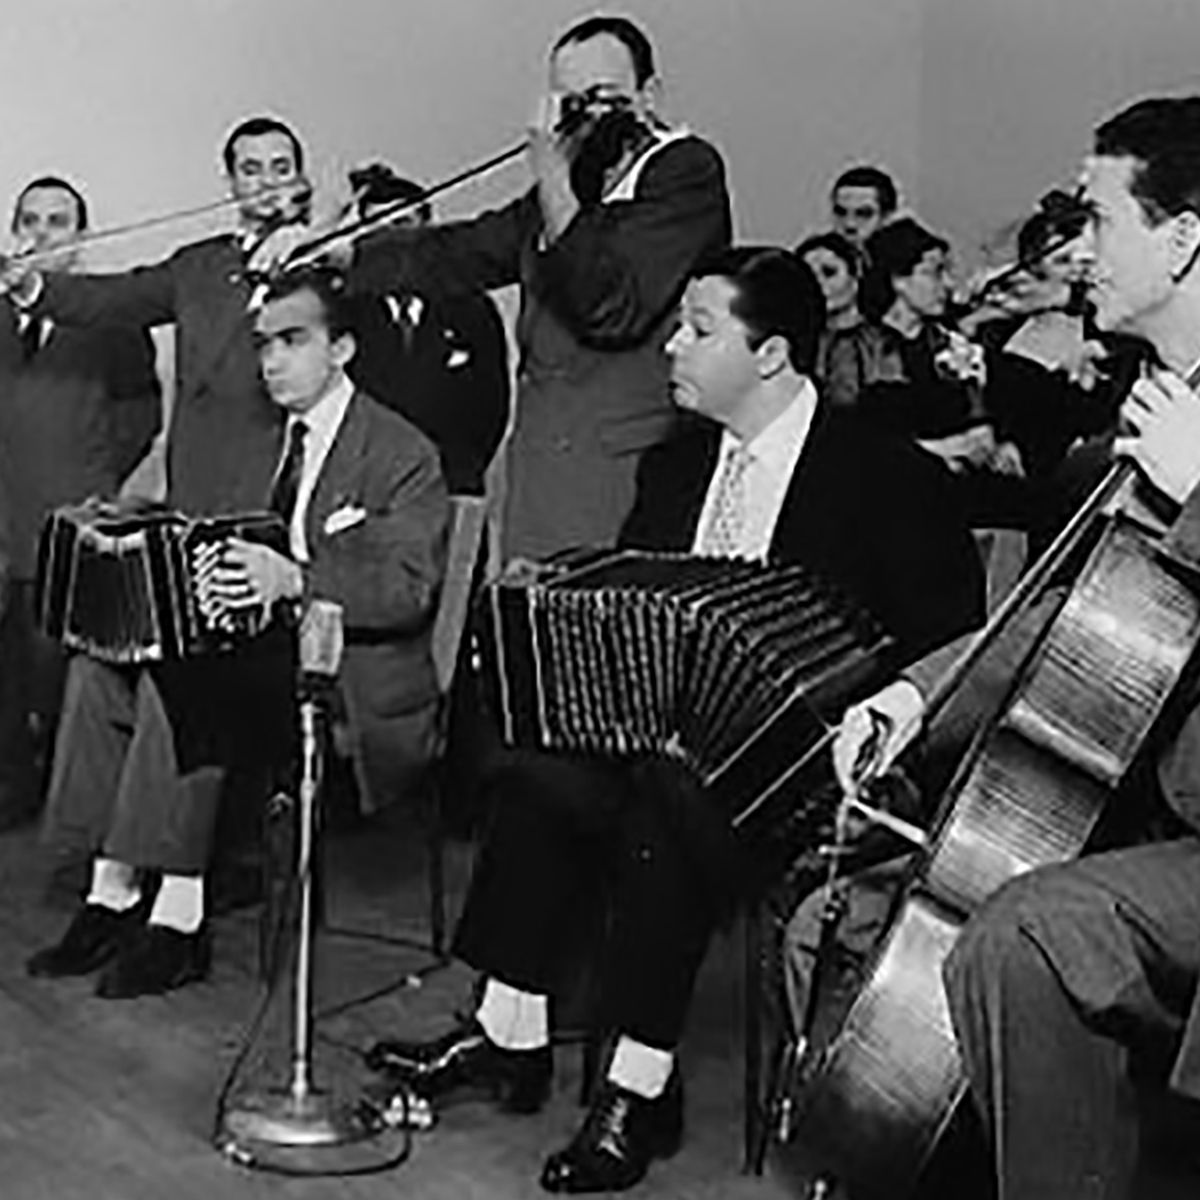 Anibal Troilo y su Orquesta Típica Argentine Tango music.